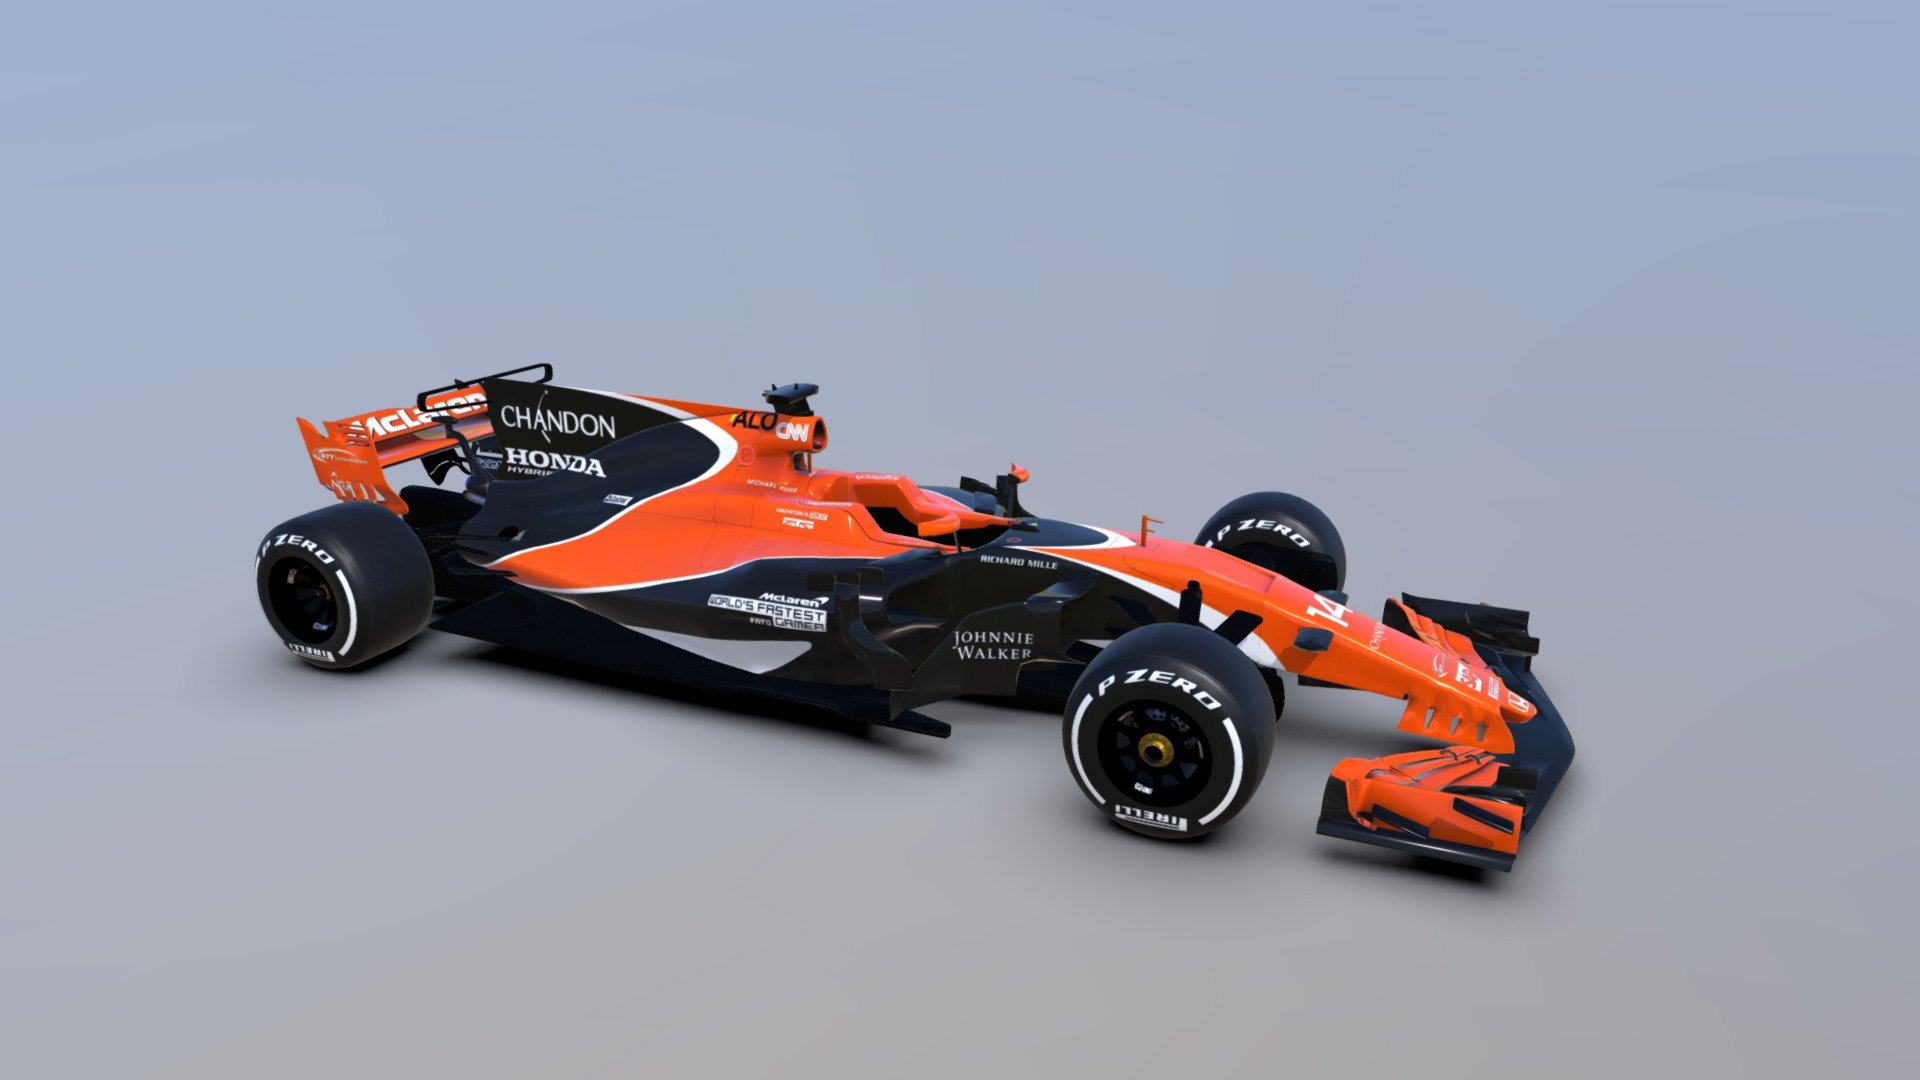 F1 2017 McLaren Honda MCL32, 3D model, low poly for Grand Prix 4.
Monza livery 3d model